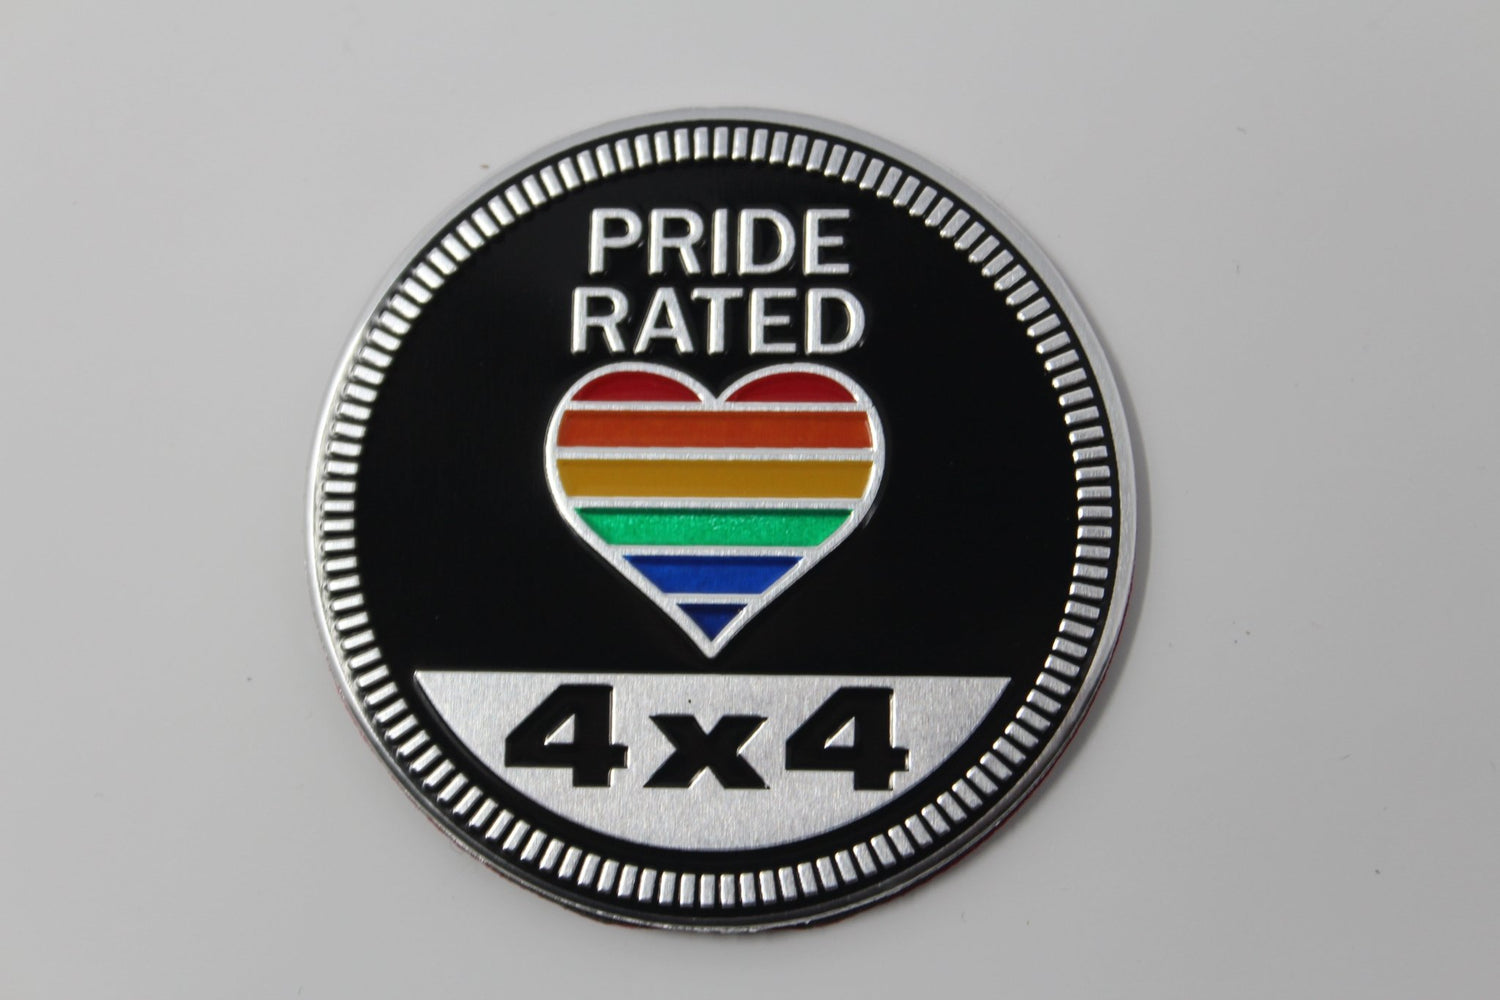 Pride Rated Rainbow Jeep 4x4 3D Aluminum Badge - Jeep Vehicle Decor Accessory Sets